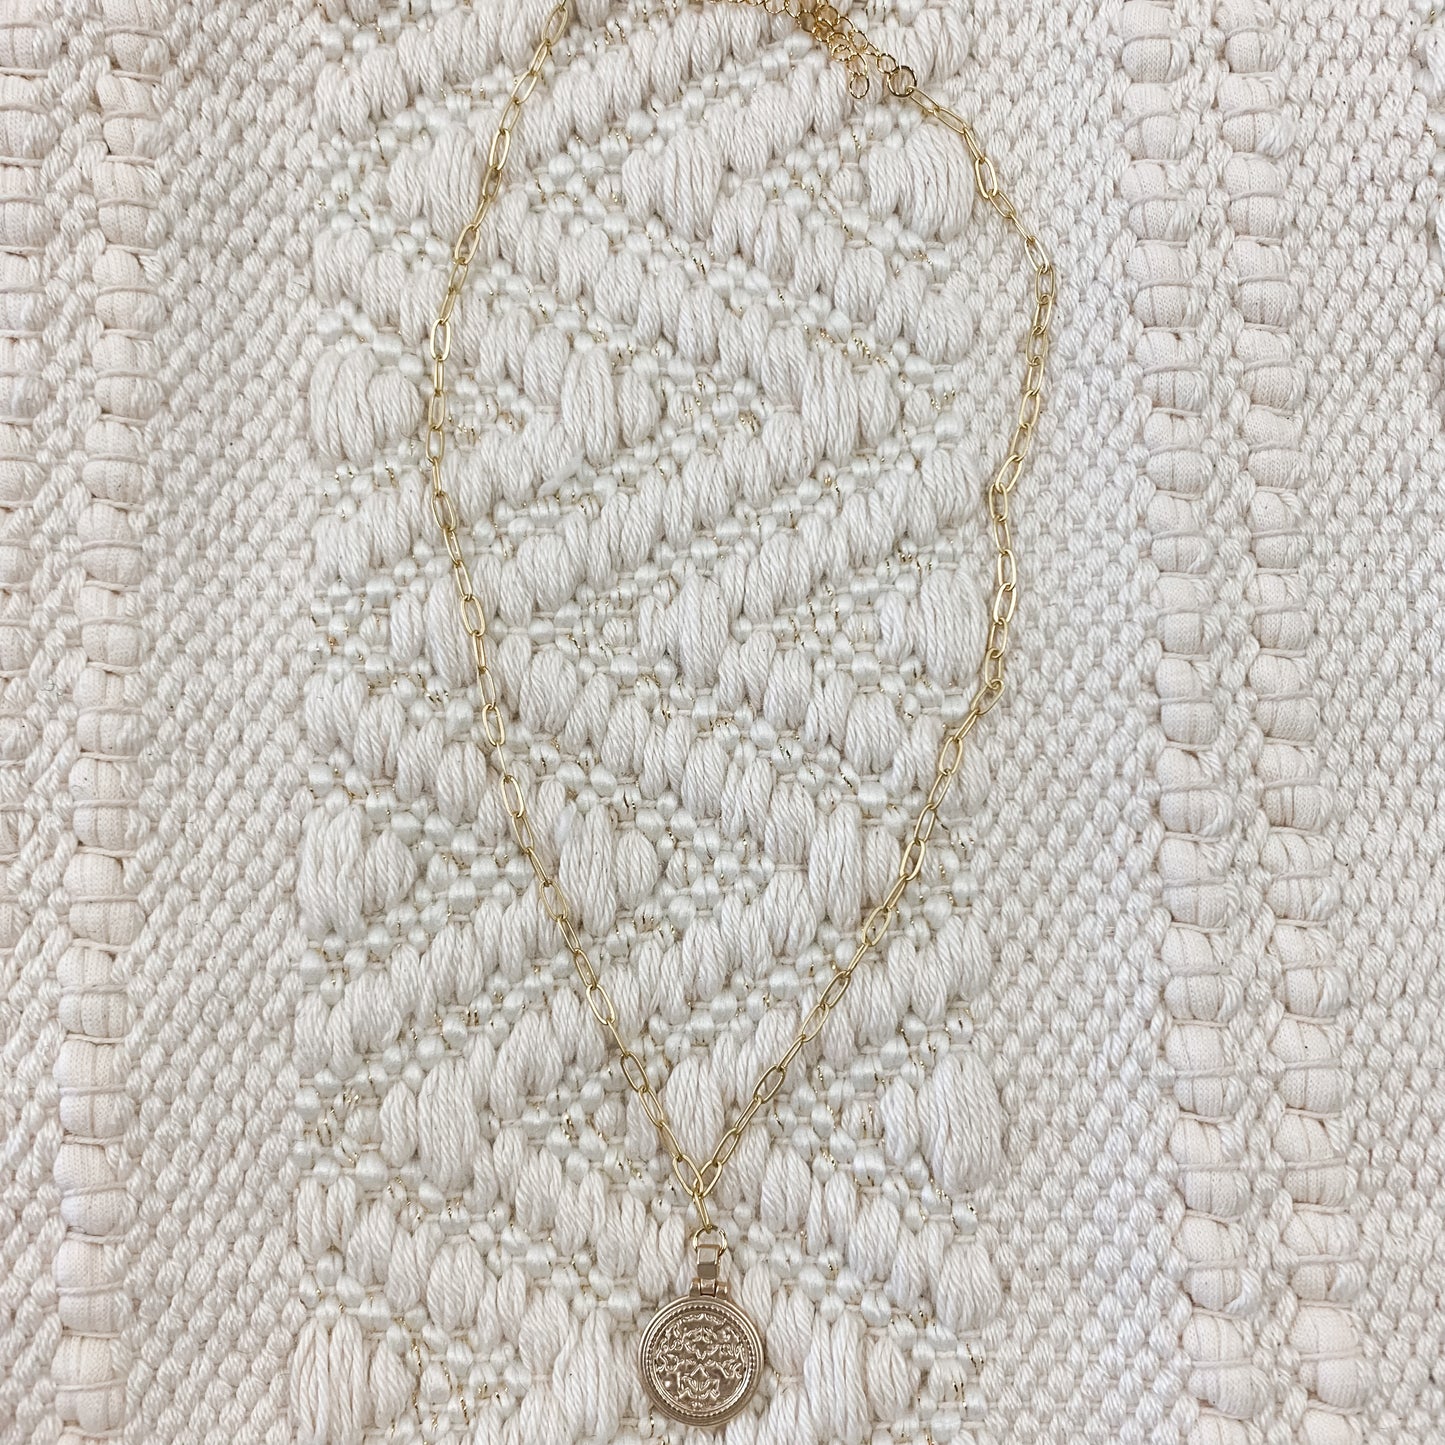 Good Luck Coin Necklace (Jennifer Thames Originals)